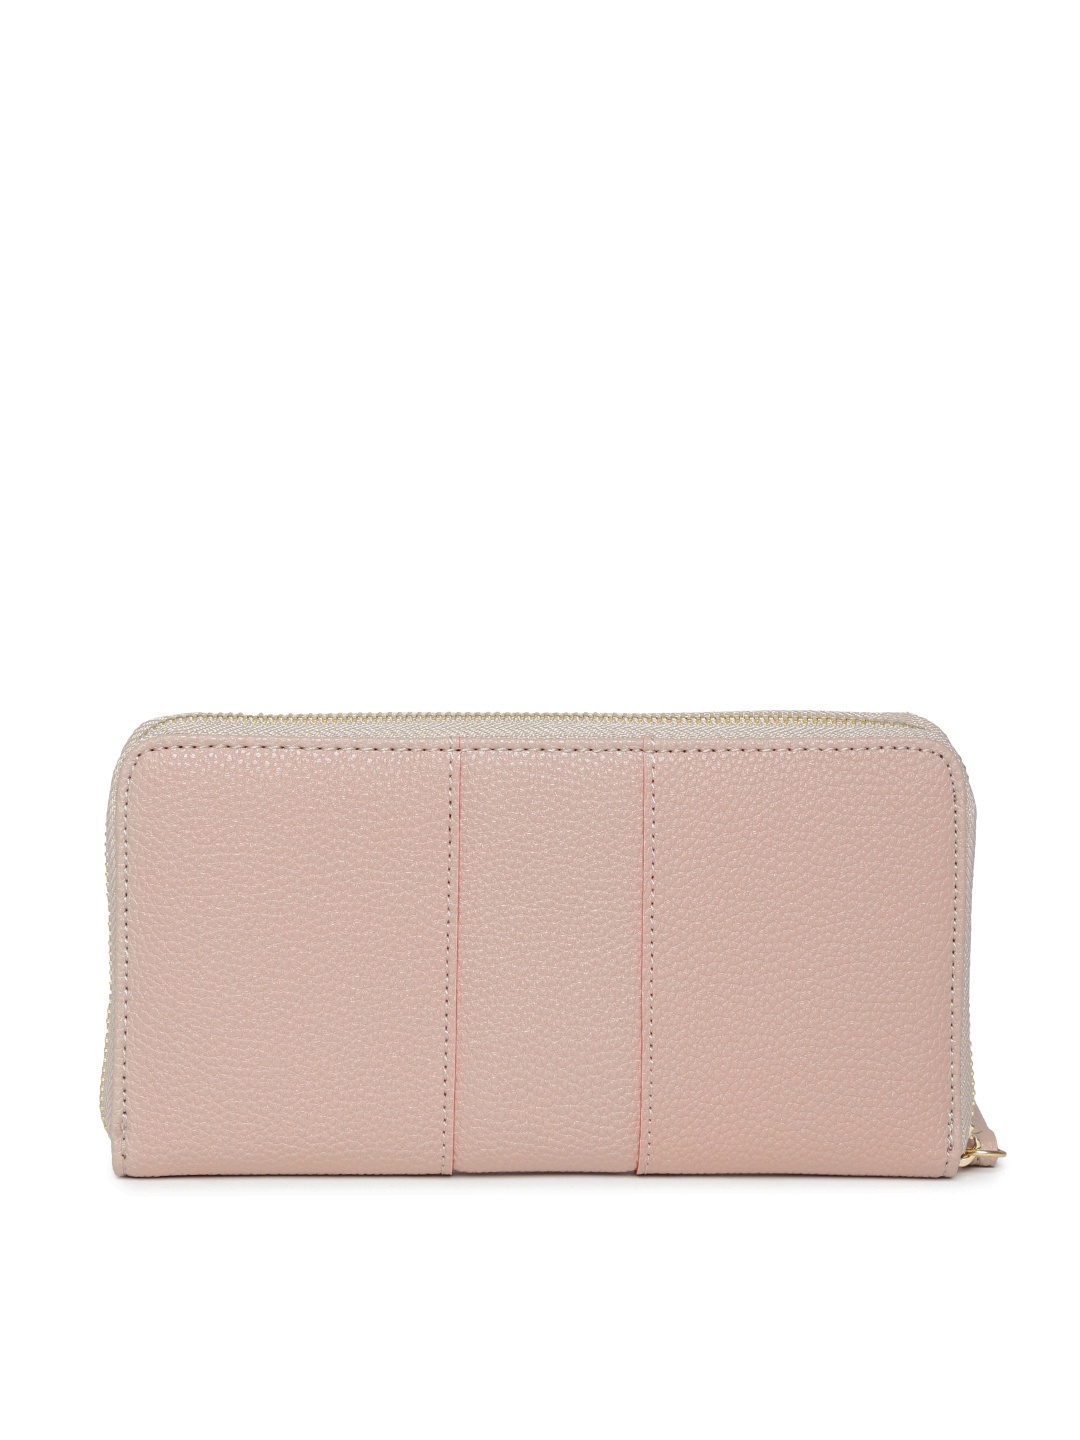 Myntra Parfois Women Light Pink Zip Wallet 790080 | Buy Myntra Parfois ...